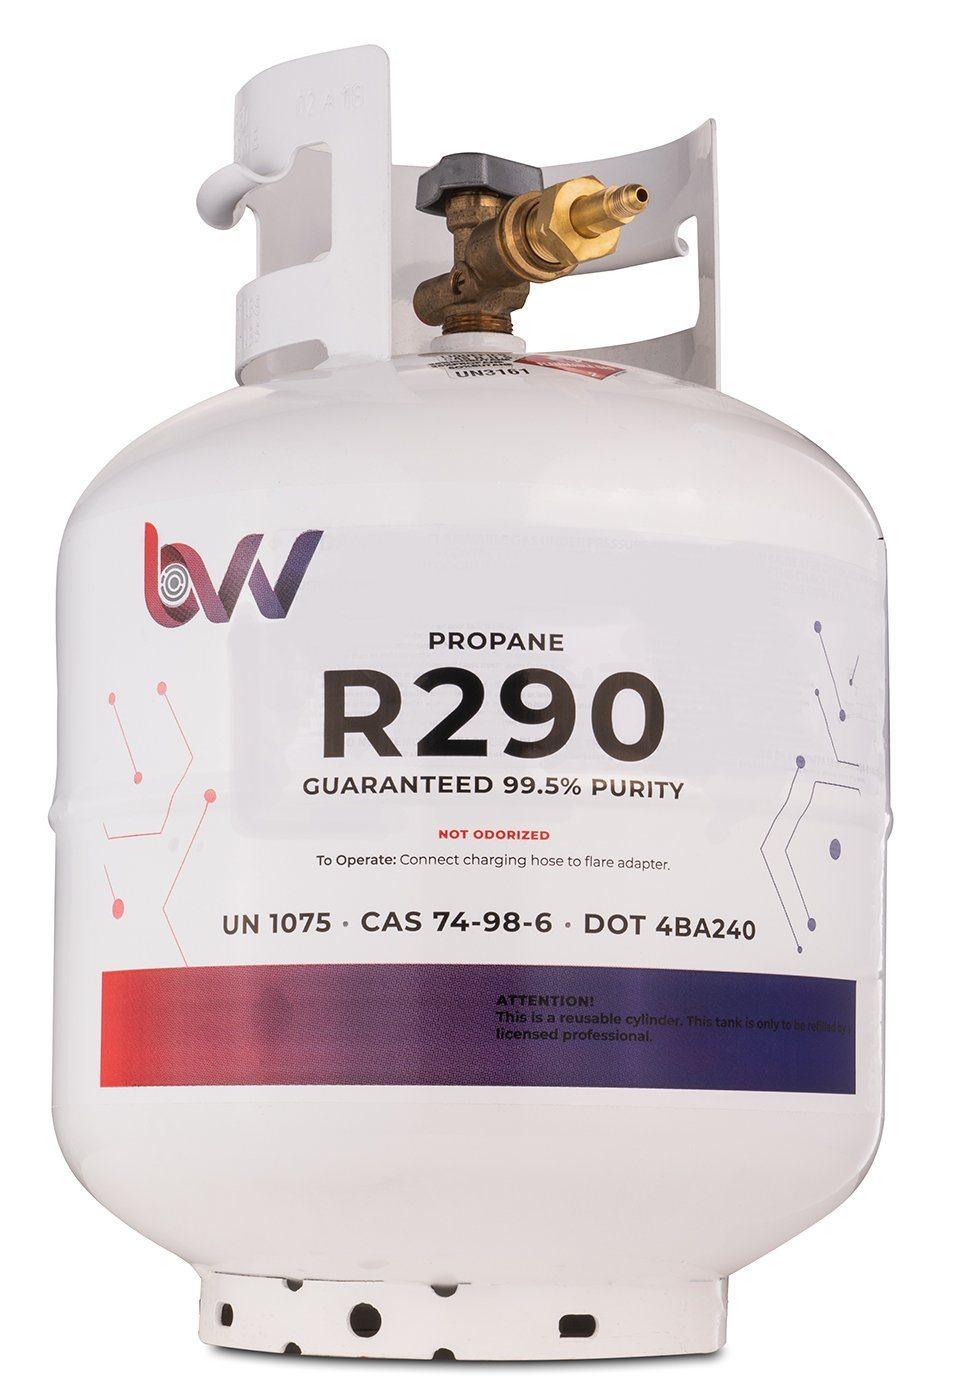 Buy 2 Get 1 Free - 20LB High Purity USA PROPANE R290 - 99.5% Guaranteed - BVV High Desert Scientific